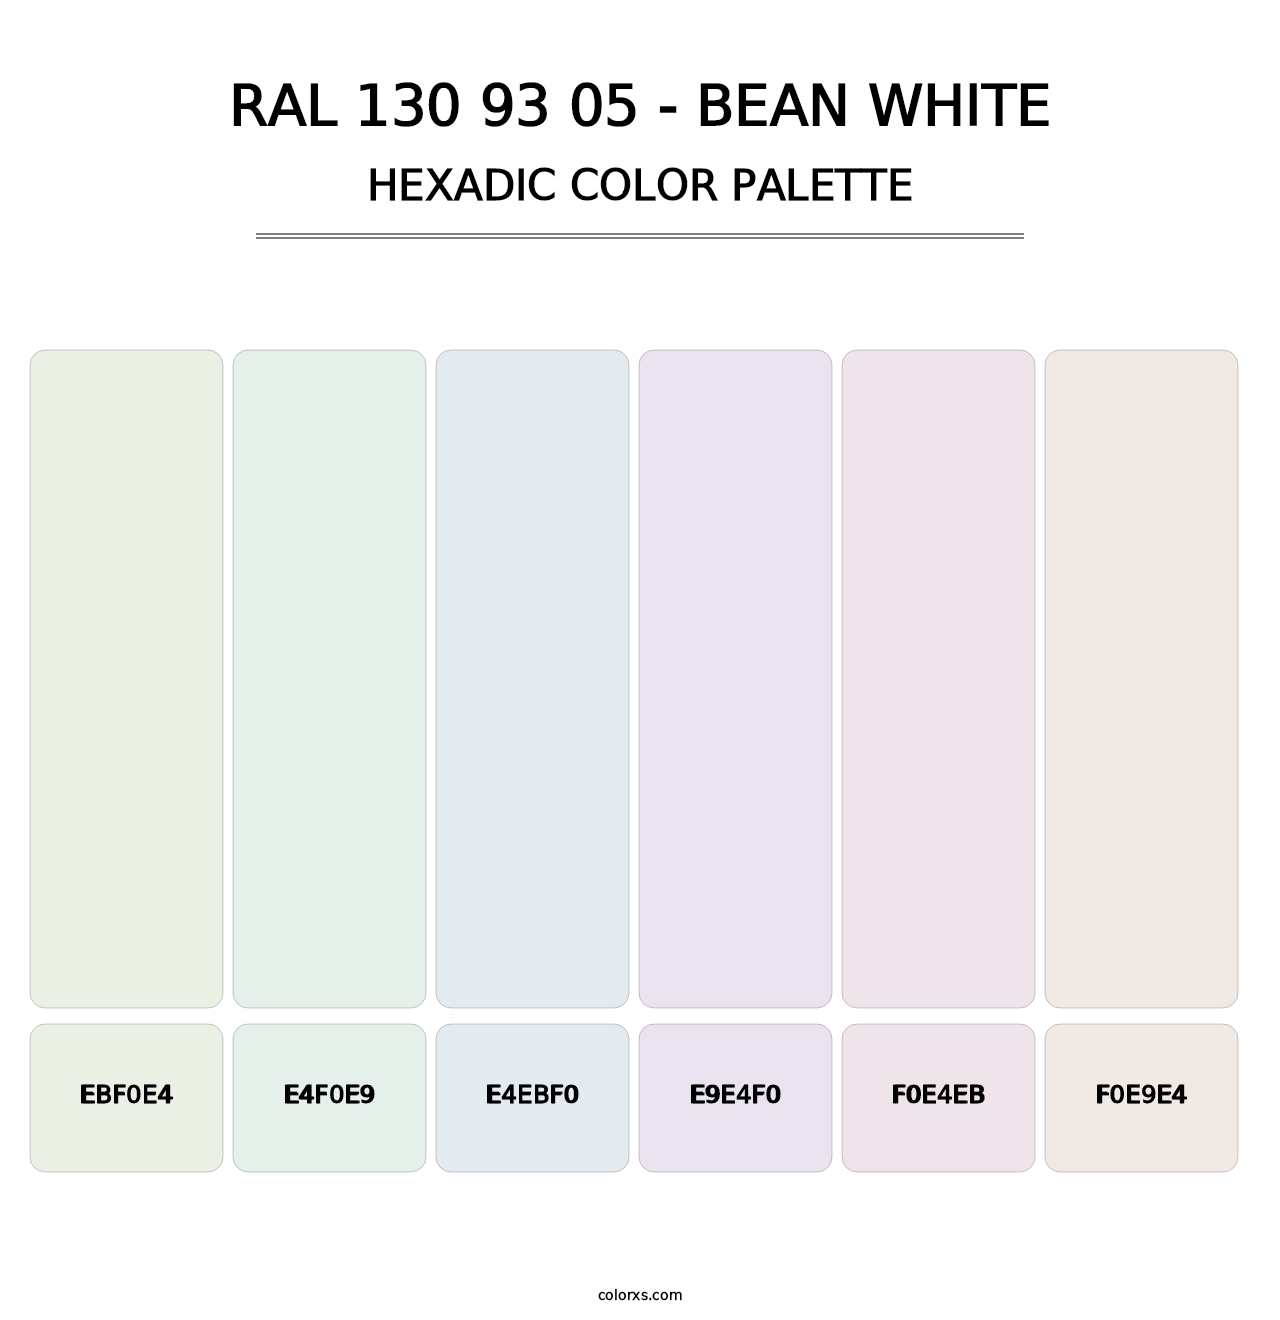 RAL 130 93 05 - Bean White - Hexadic Color Palette